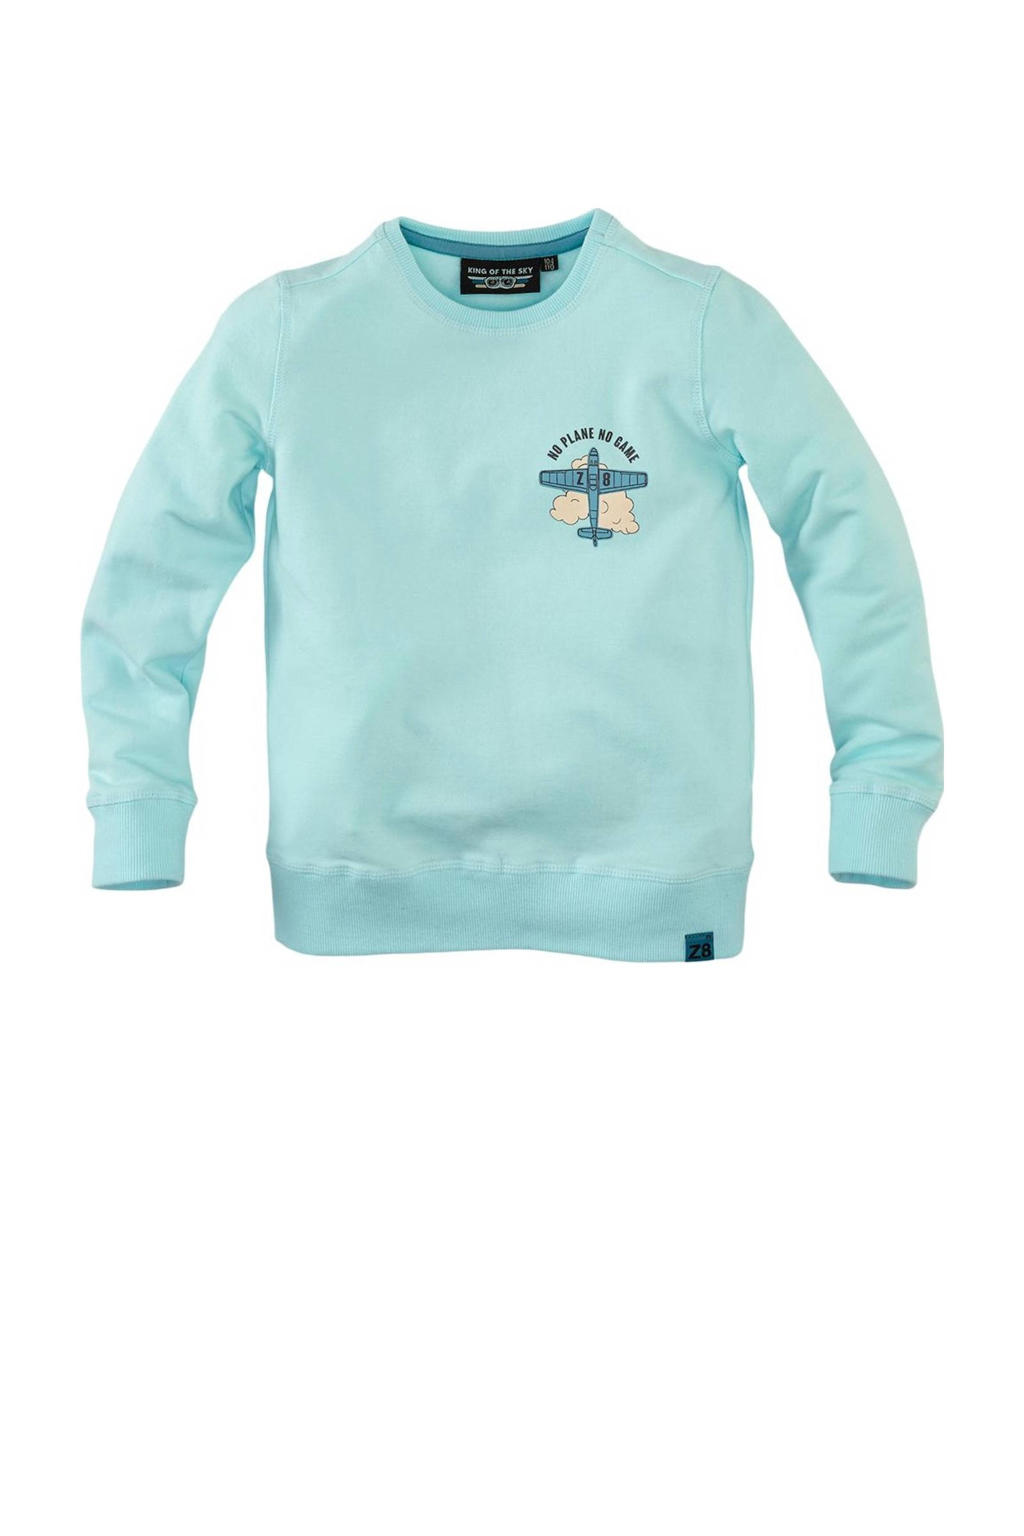 Z8 sweater Jona met printopdruk tuquoise